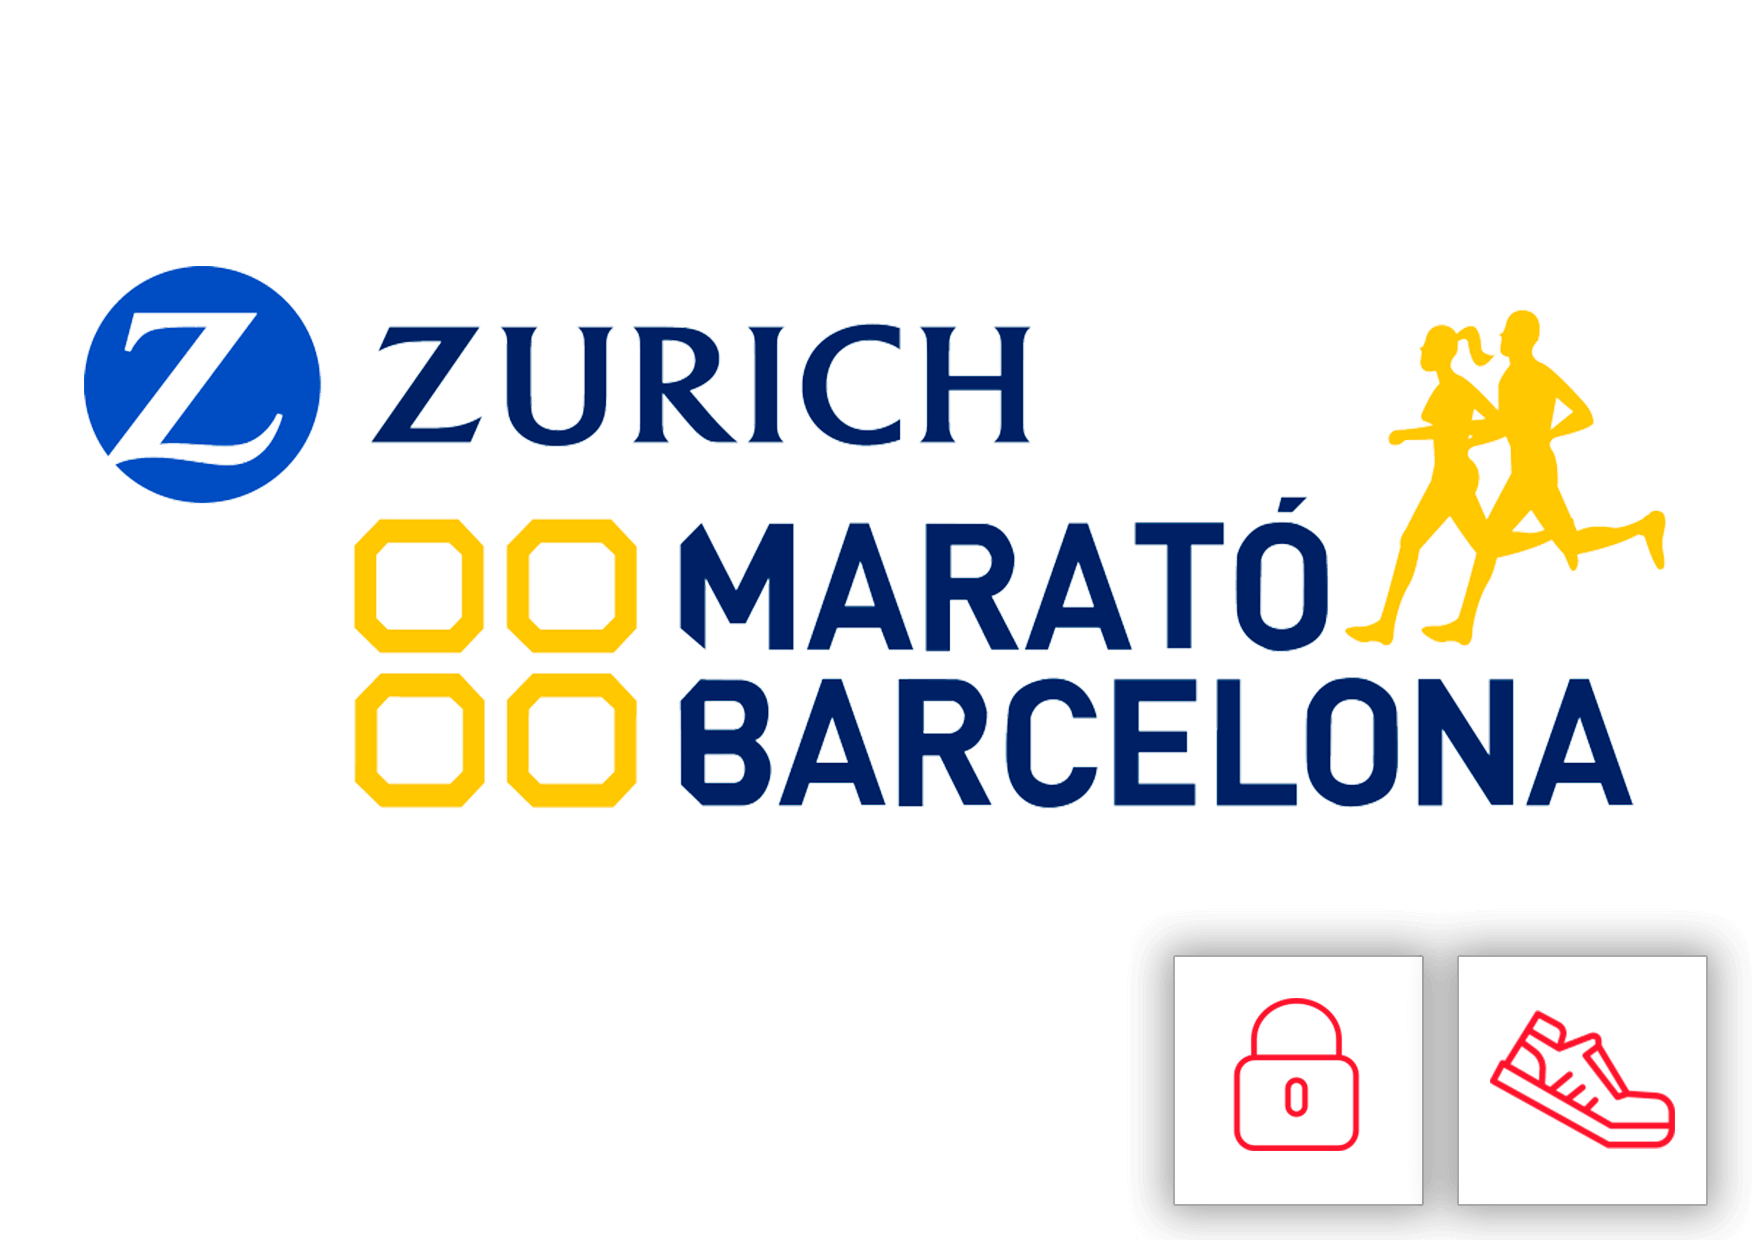 Marato de barcelona